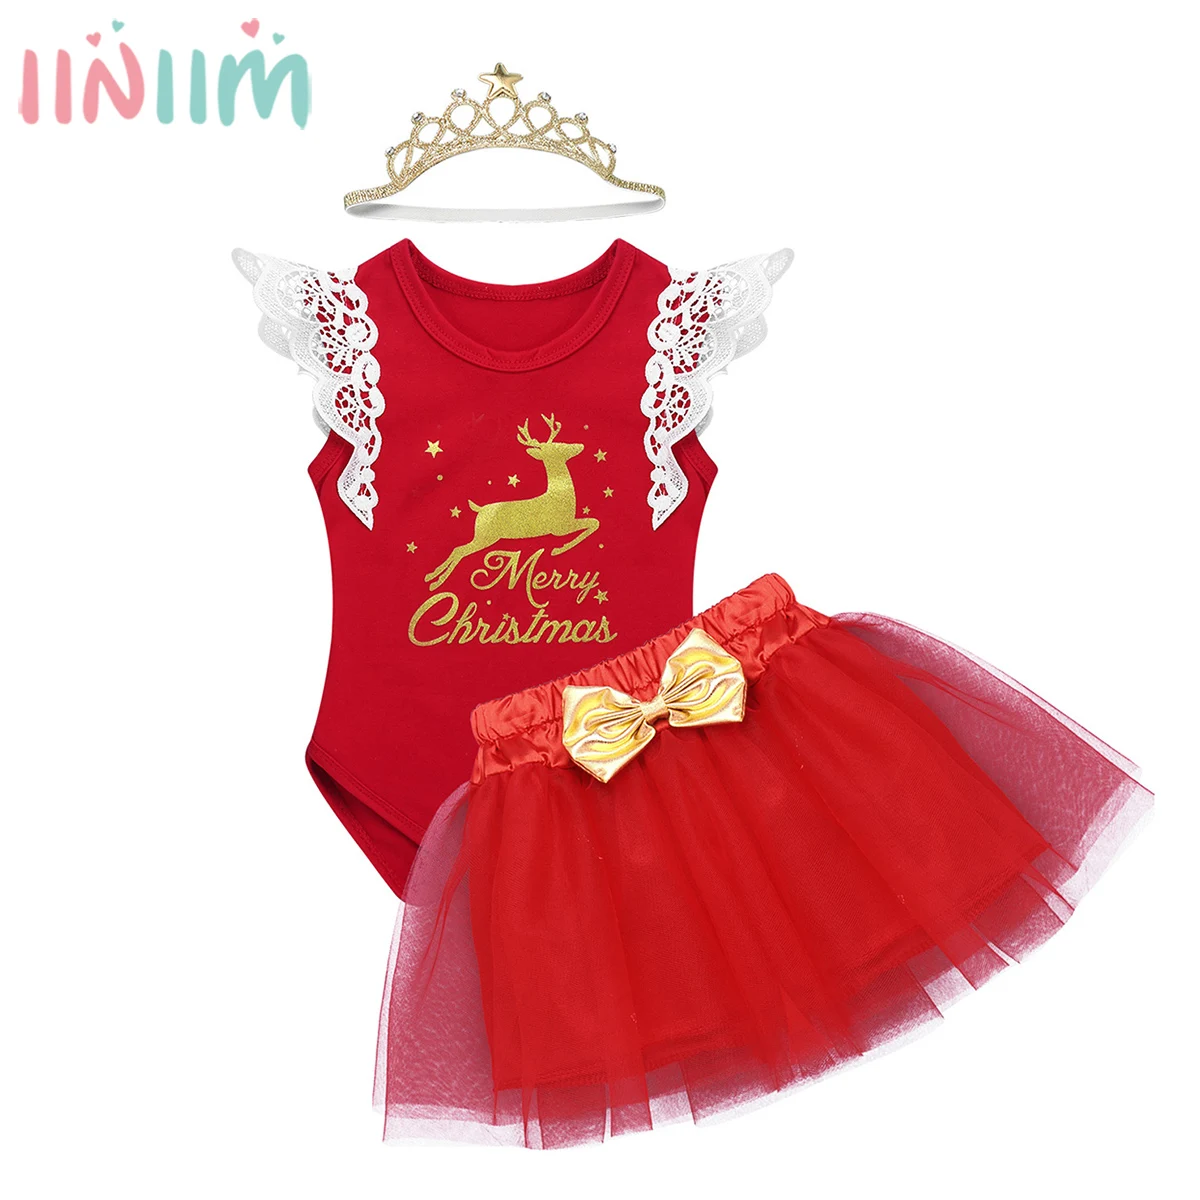 

Infantil Baby Girls Xmas Outfit Clothing Set Flying Sleeve Deer Merry Christmas Printed Romper with Mesh Tutu Skirt Headband